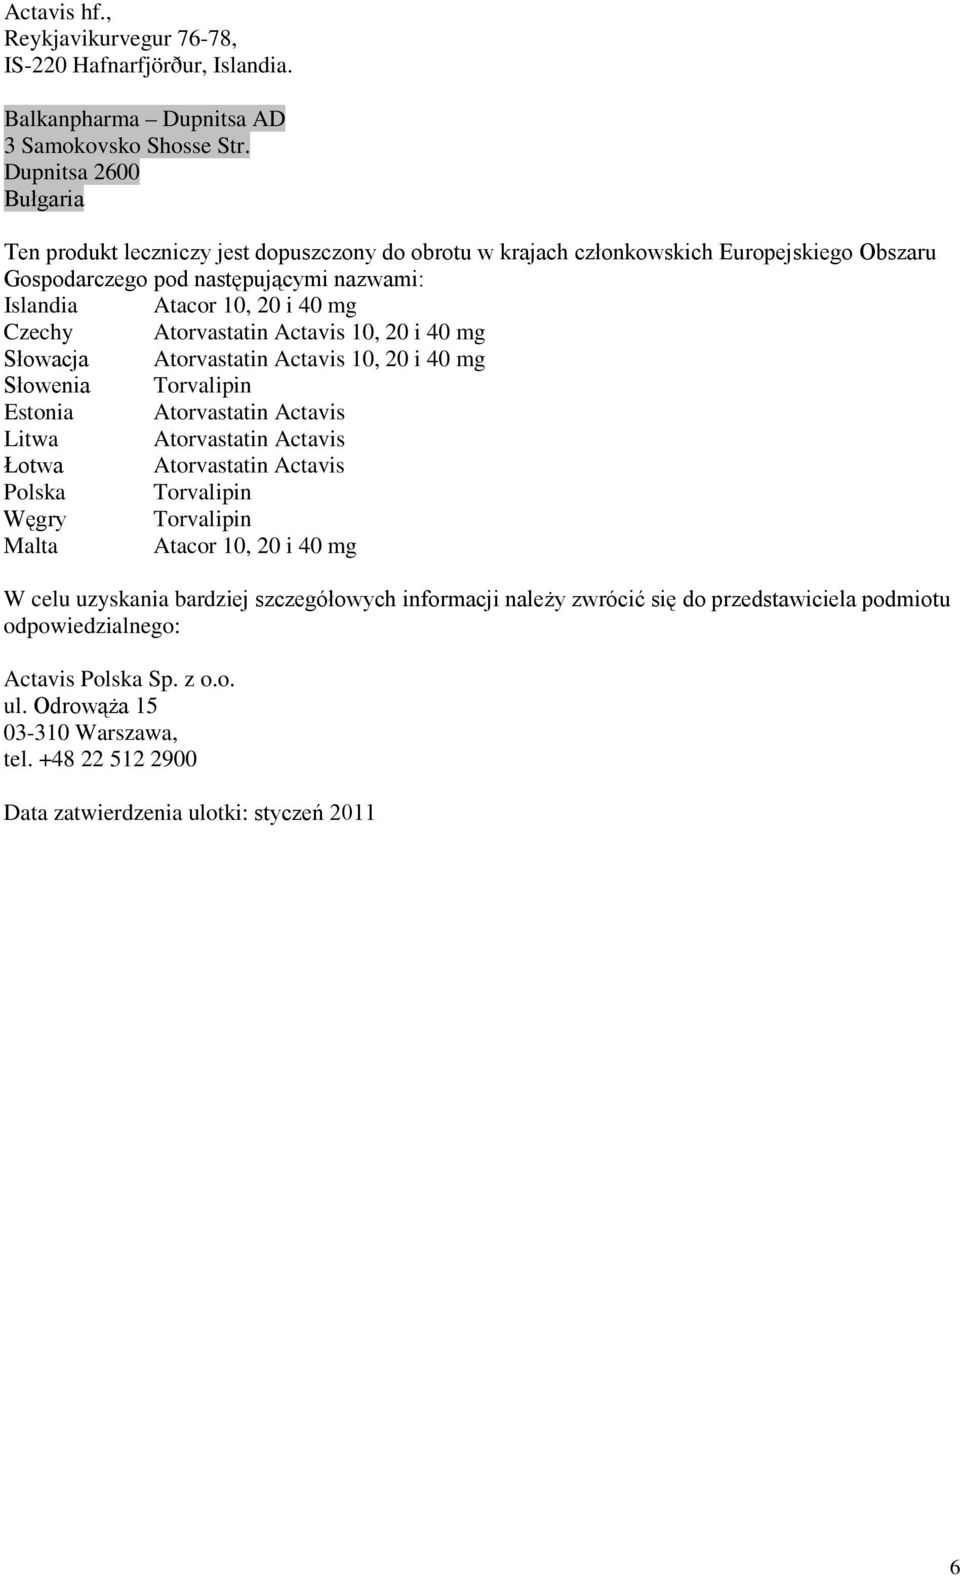 Atorvastatin Actavis 10, 20 i 40 mg Słowacja Atorvastatin Actavis 10, 20 i 40 mg Słowenia Torvalipin Estonia Atorvastatin Actavis Litwa Atorvastatin Actavis Łotwa Atorvastatin Actavis Polska